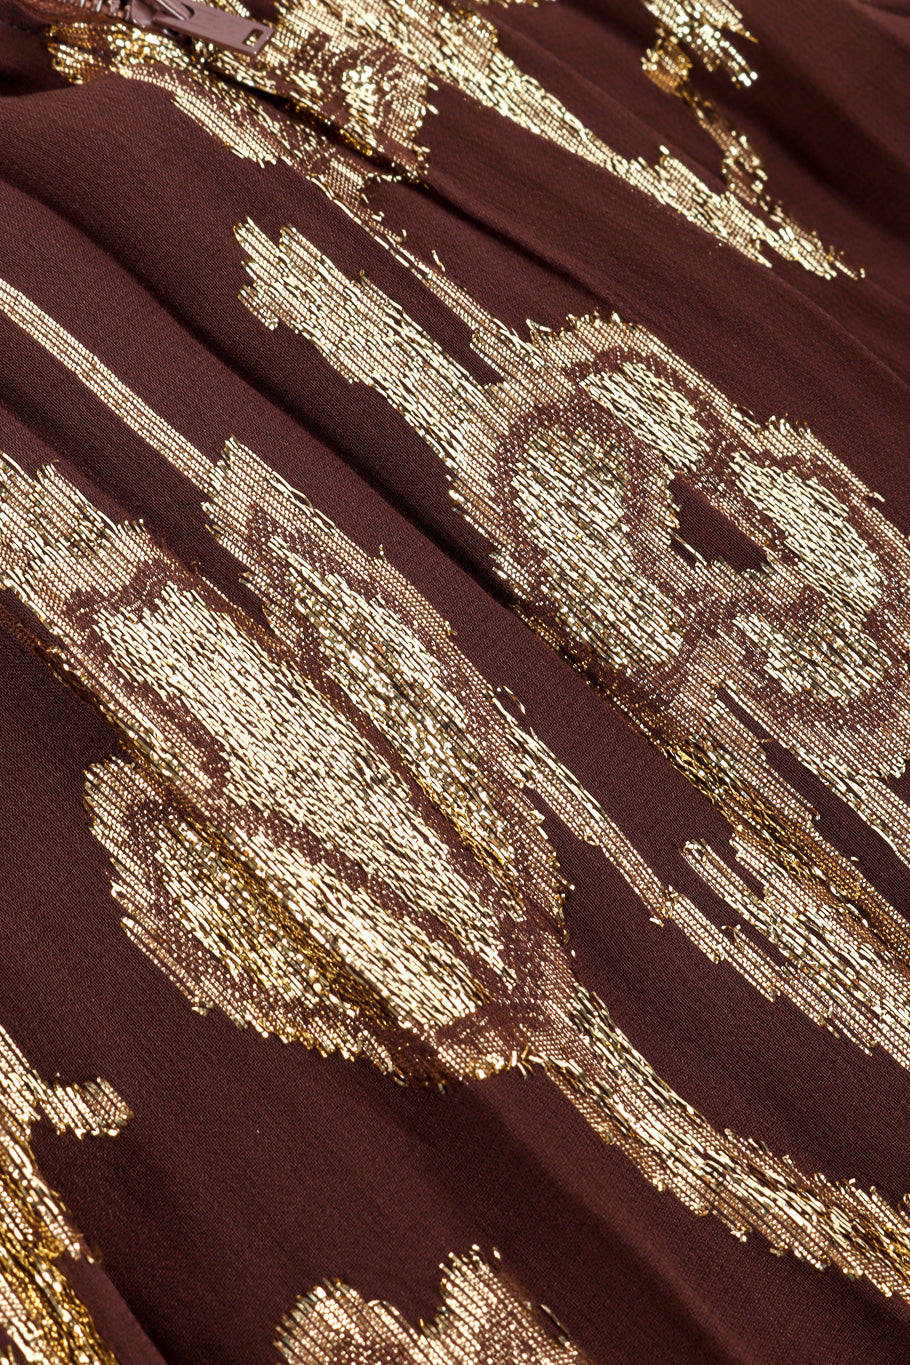 Vintage Adolfo Metallic Top and Skirt Set skirt fabric closeup @recessla